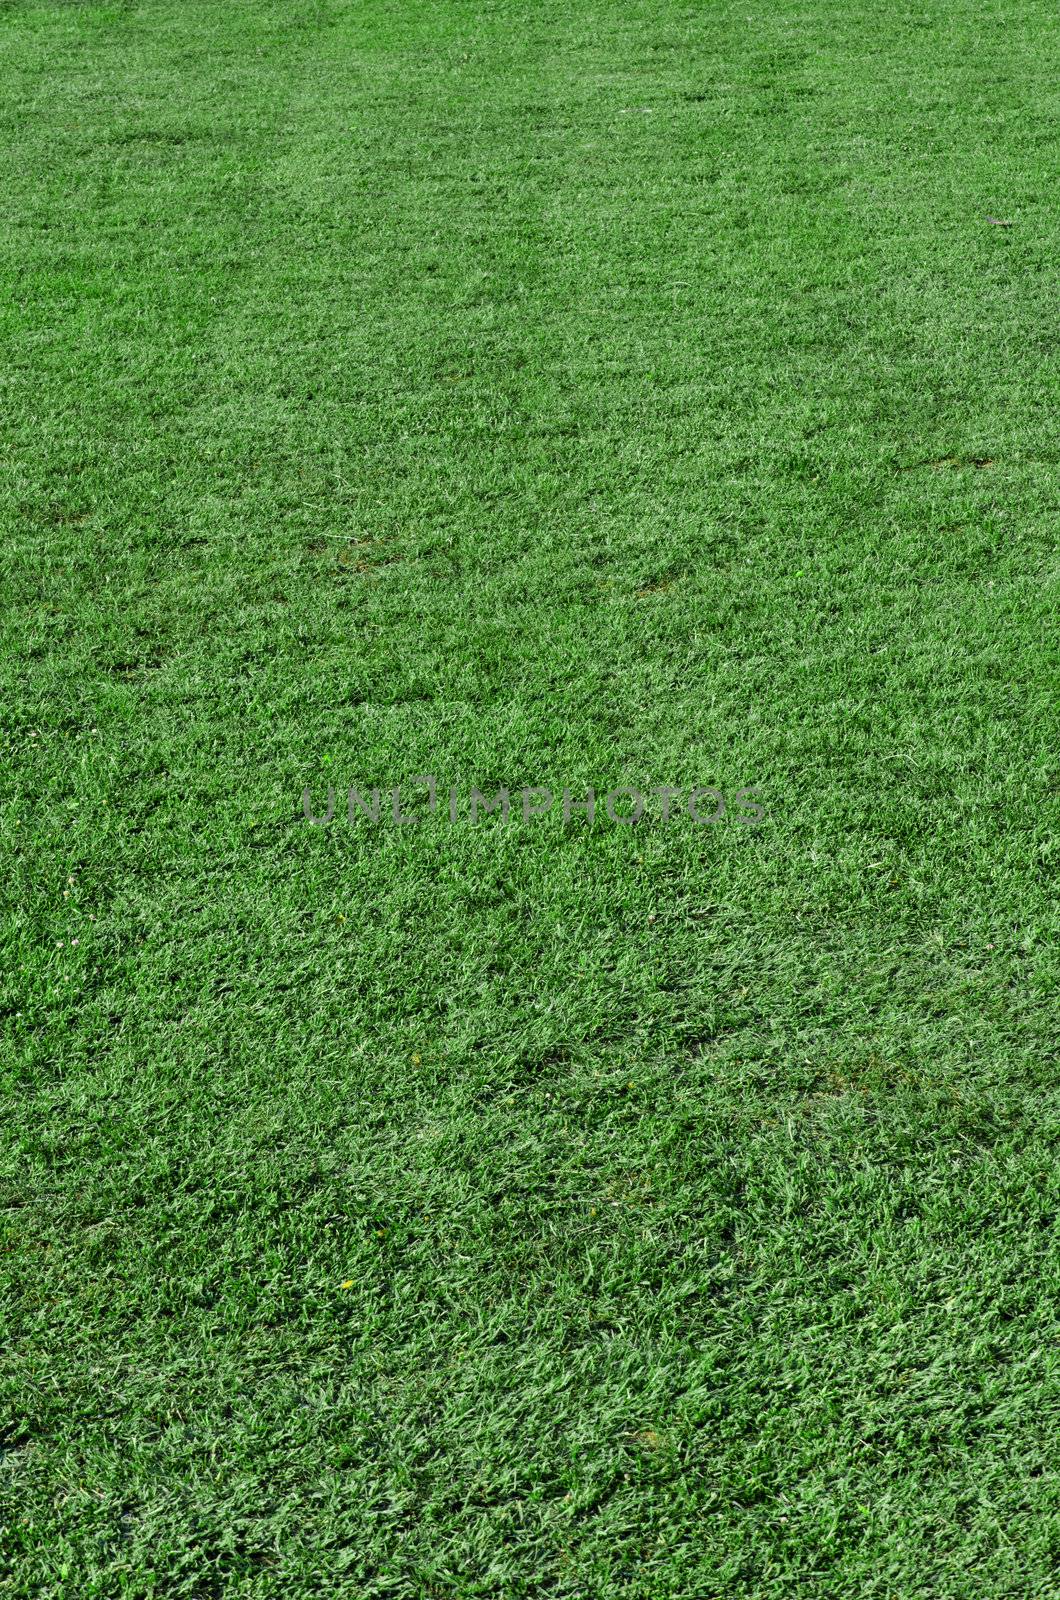 Beautiful green grass - vertical field shot with selective focus